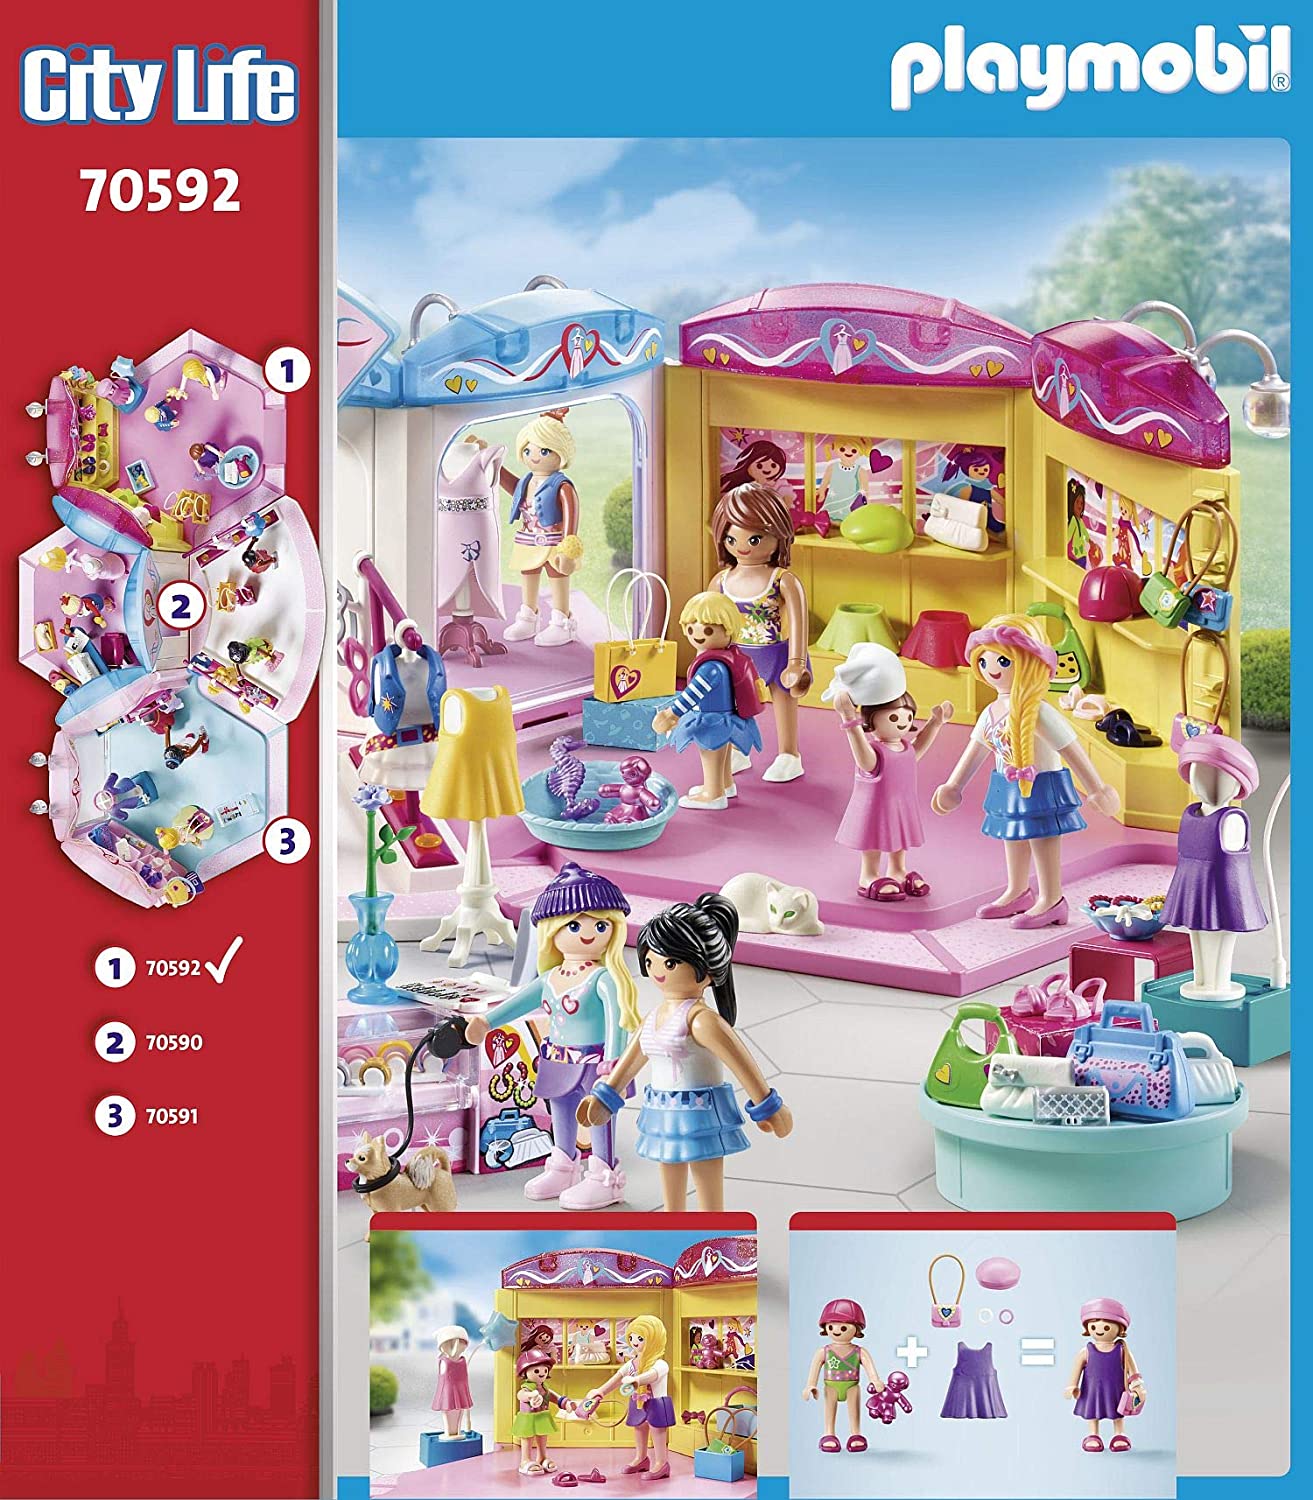 Playmobil 70592 City Life Childrens Fashion Store 